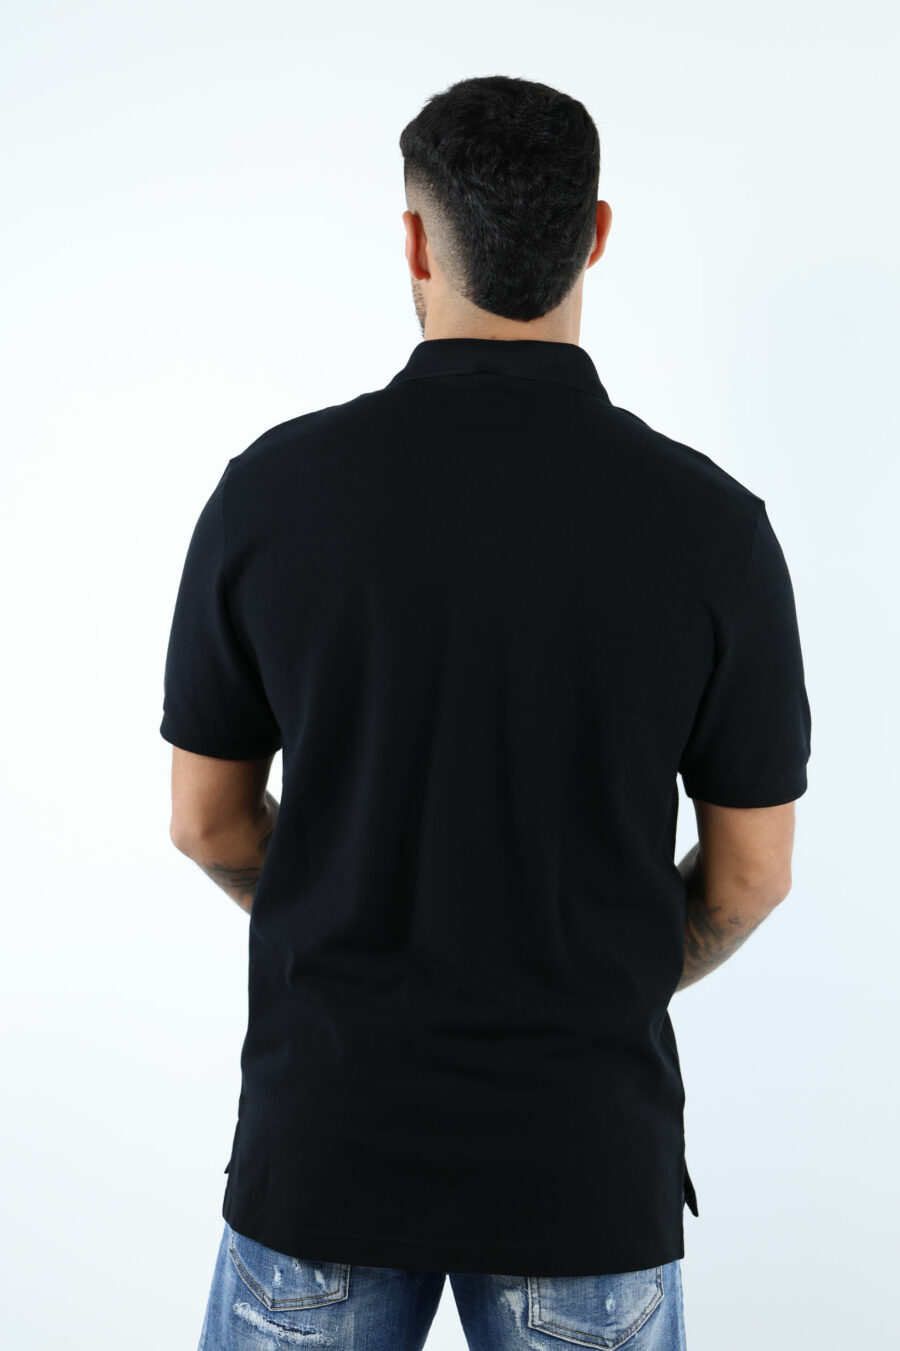 Camiseta negra con minilogo etiqueta blanca - 106967